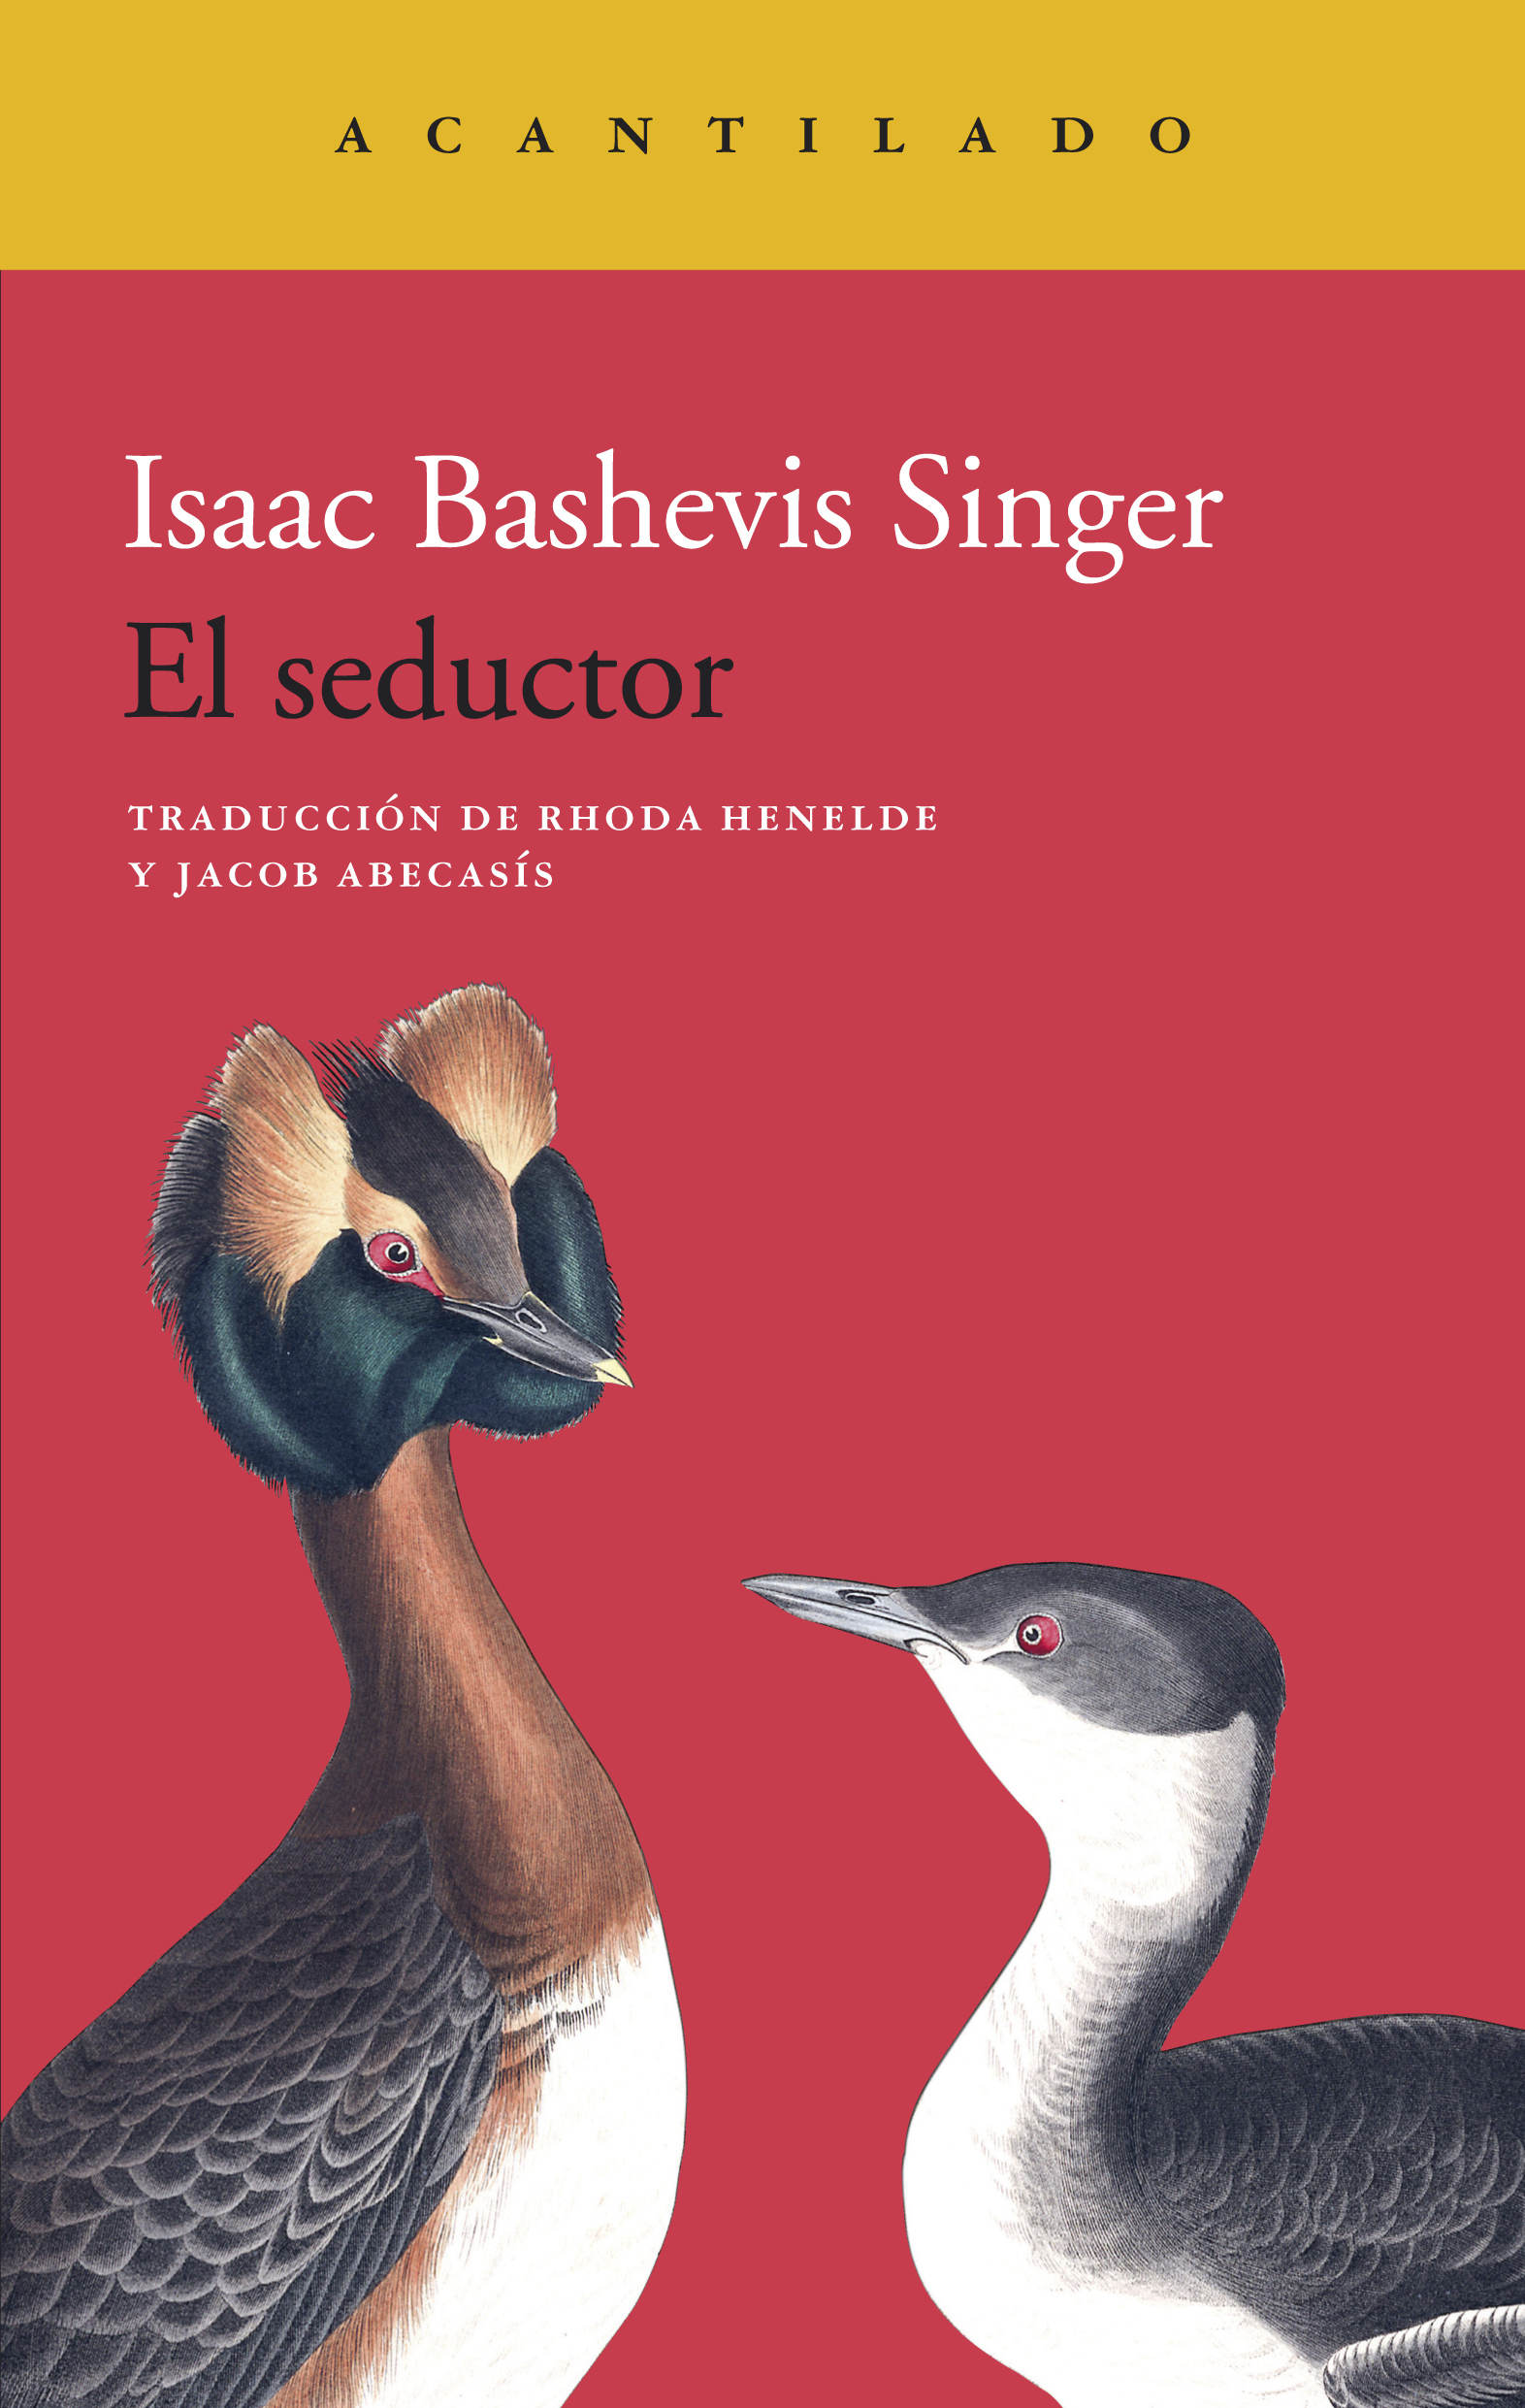 El seductor, de Isaac Bashevis Singer